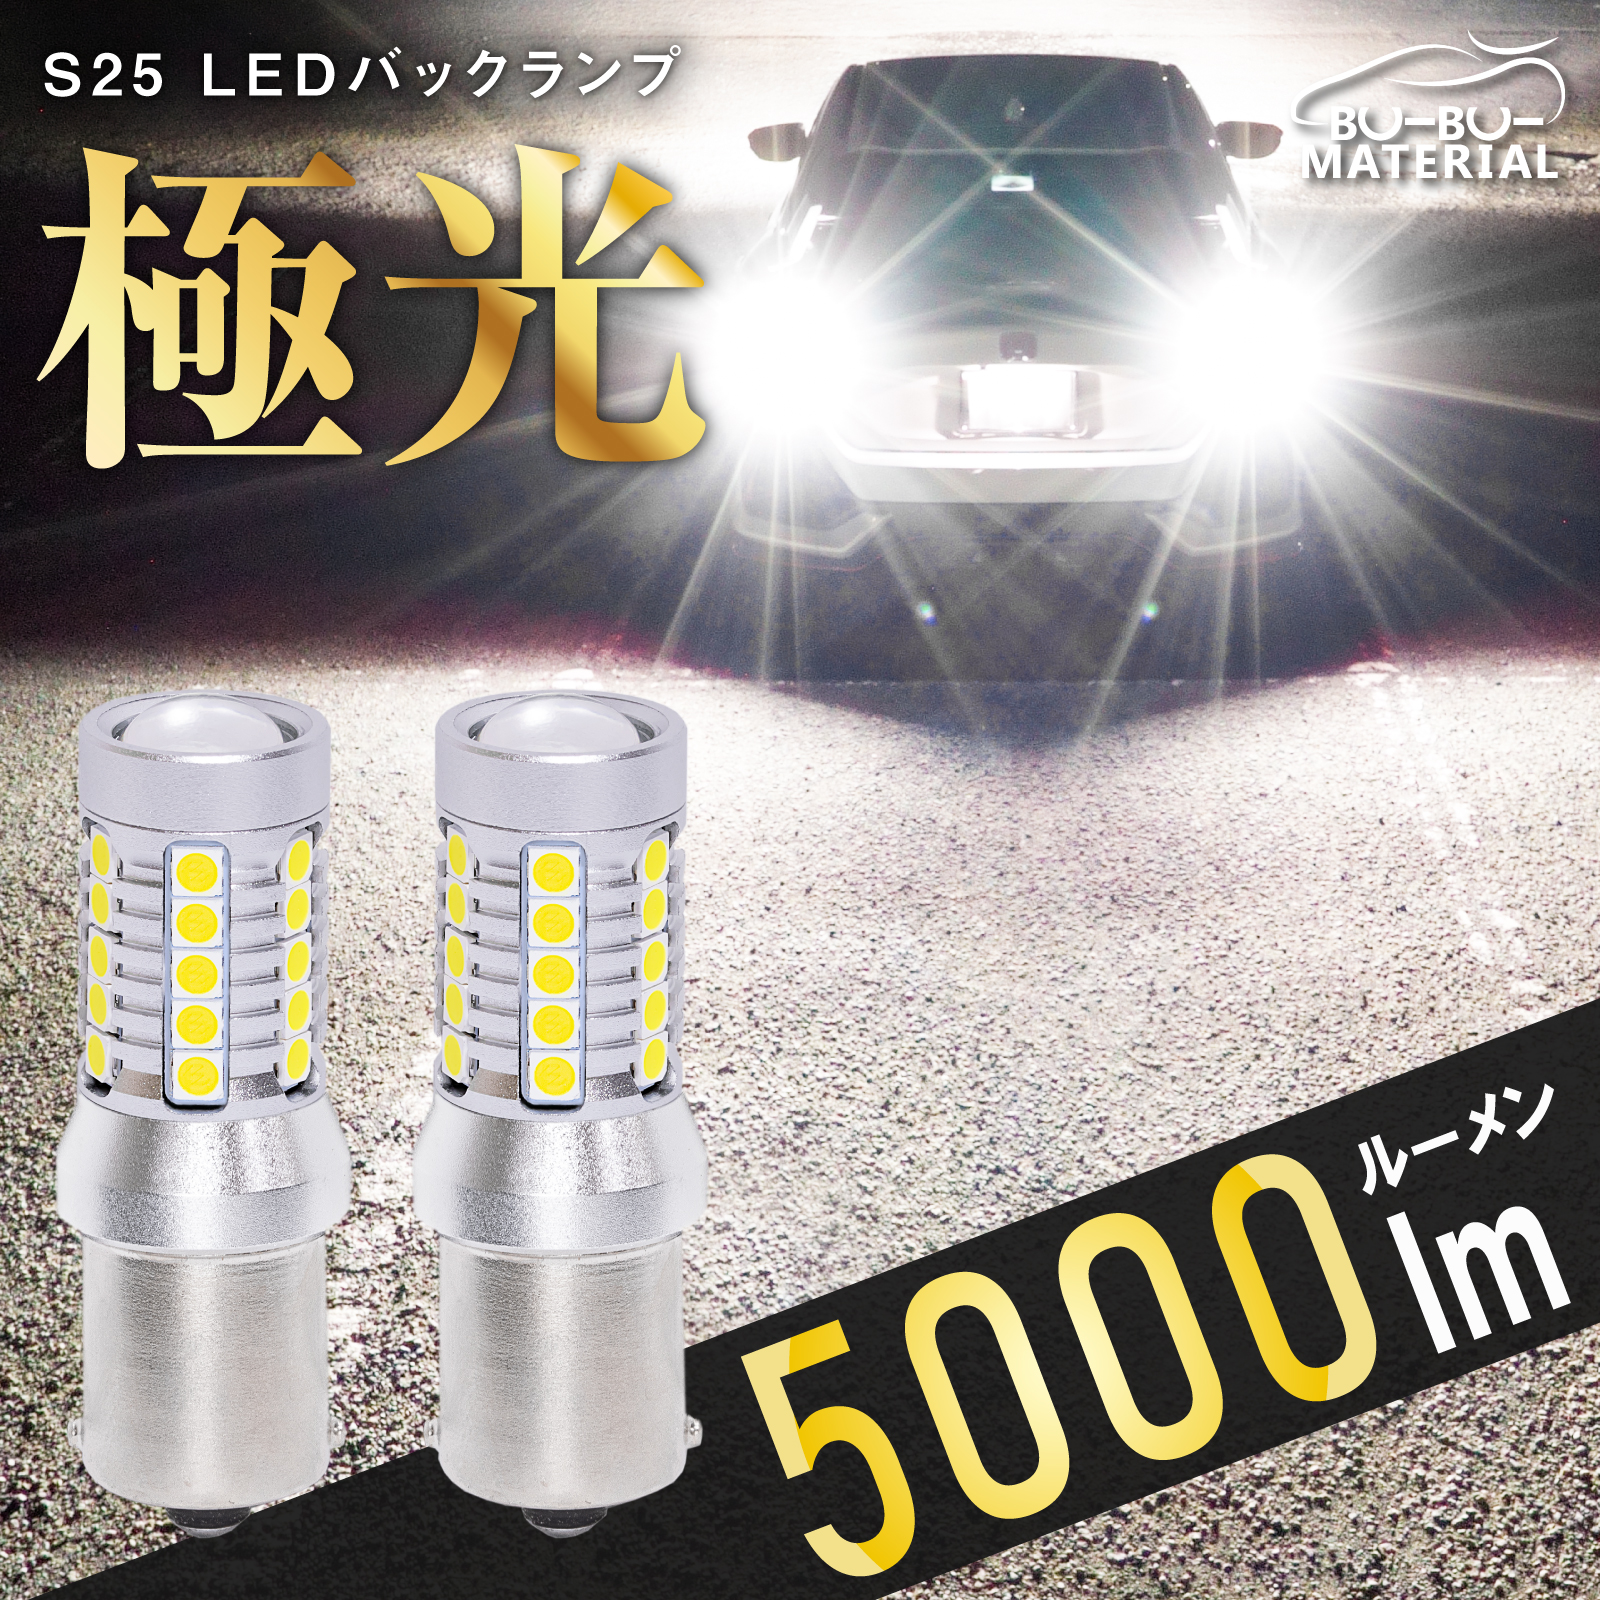 S25 LED シングル ホワイト バックランプ 爆光 車検対応 2個 5000LM 12V ぶーぶーマテリアルの商品画像